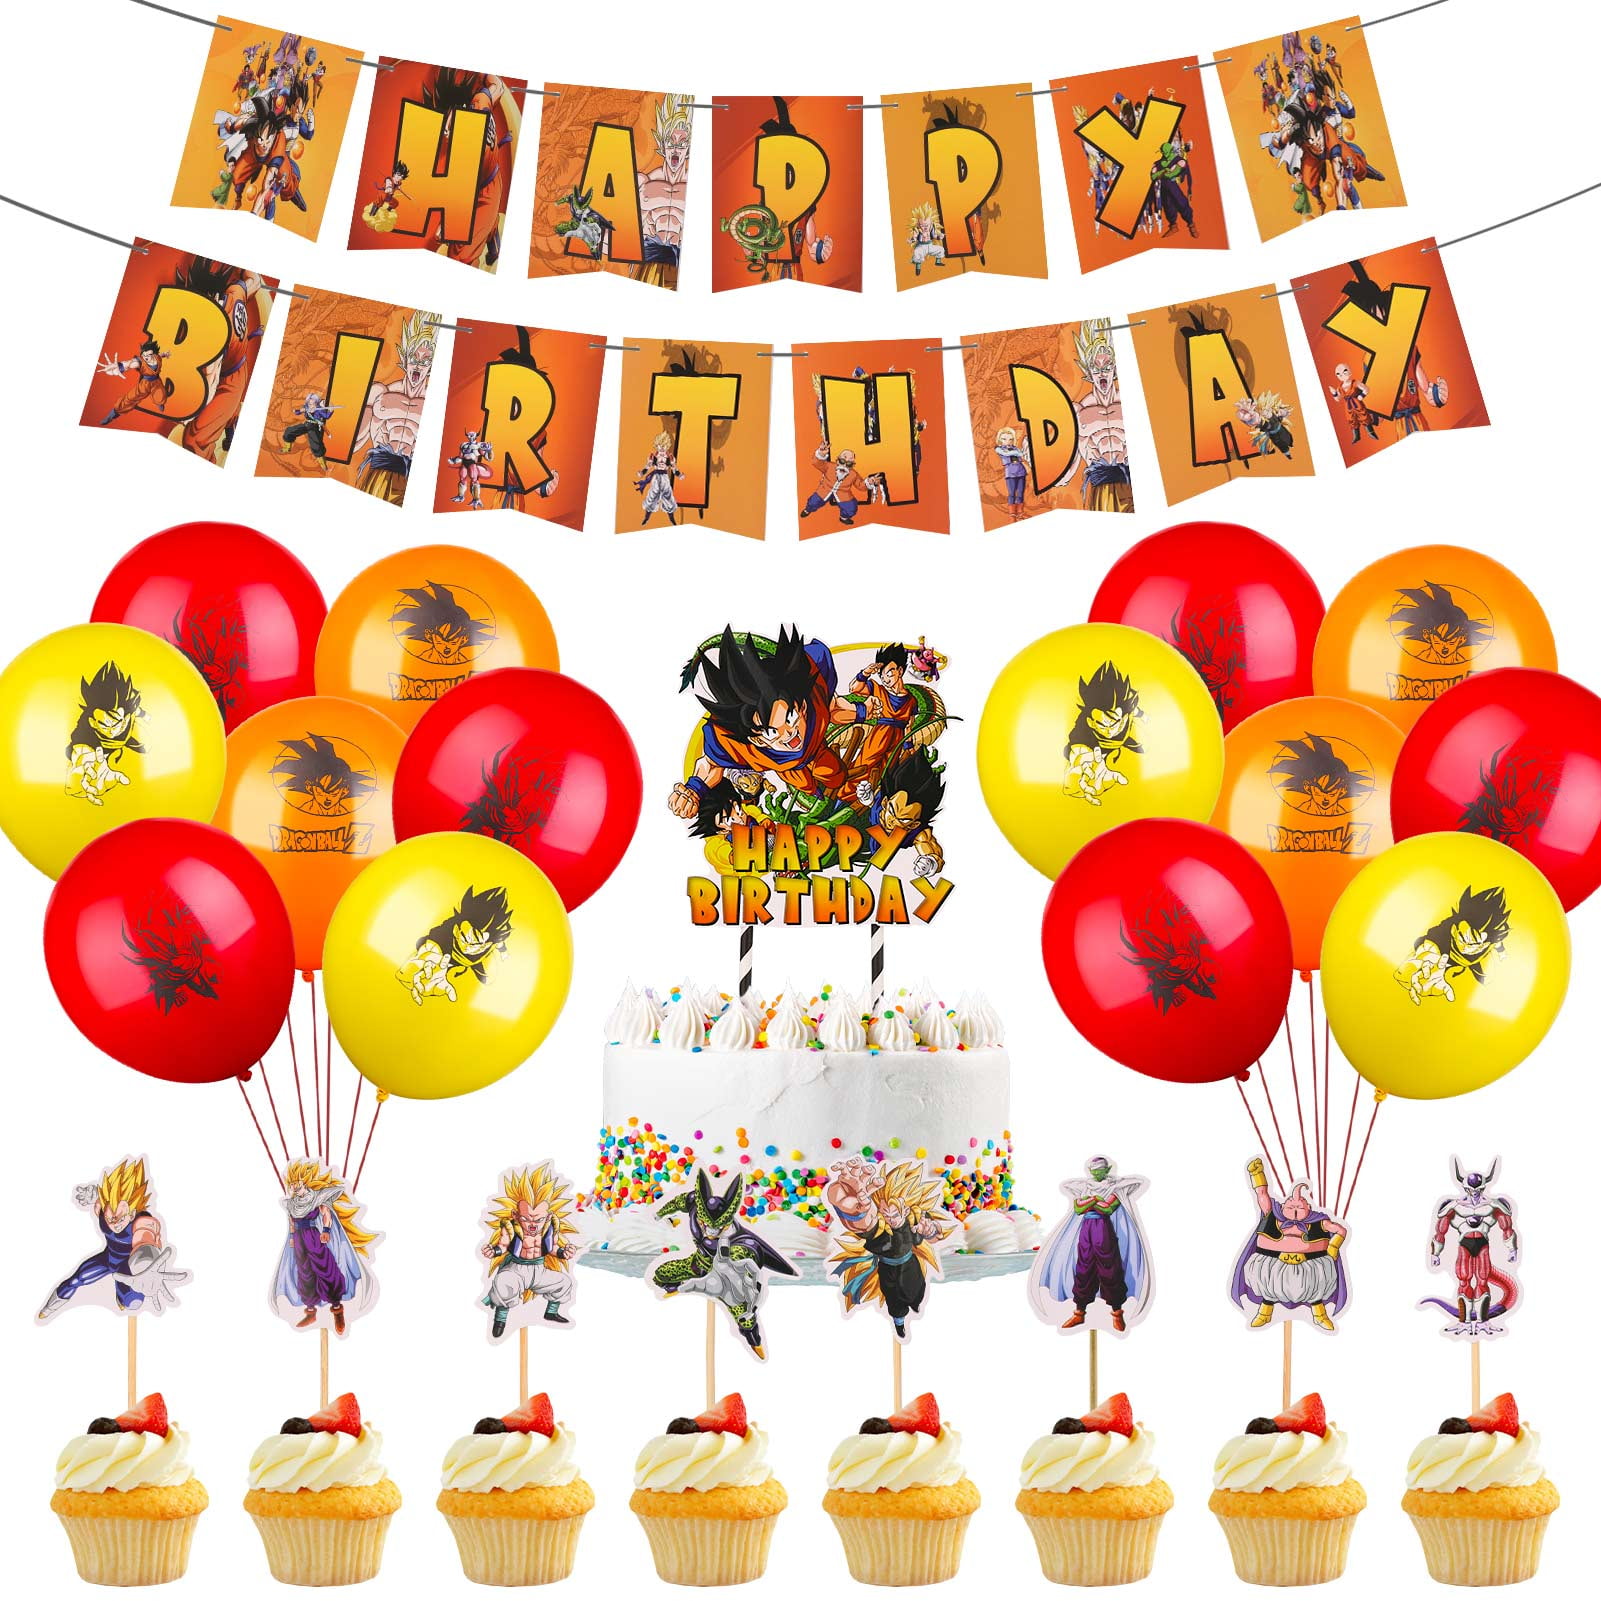 Fiesta Temática carácter Cupcakes/Cake Toppers-Ideal Cumpleaños De 12 o 24 Pcs